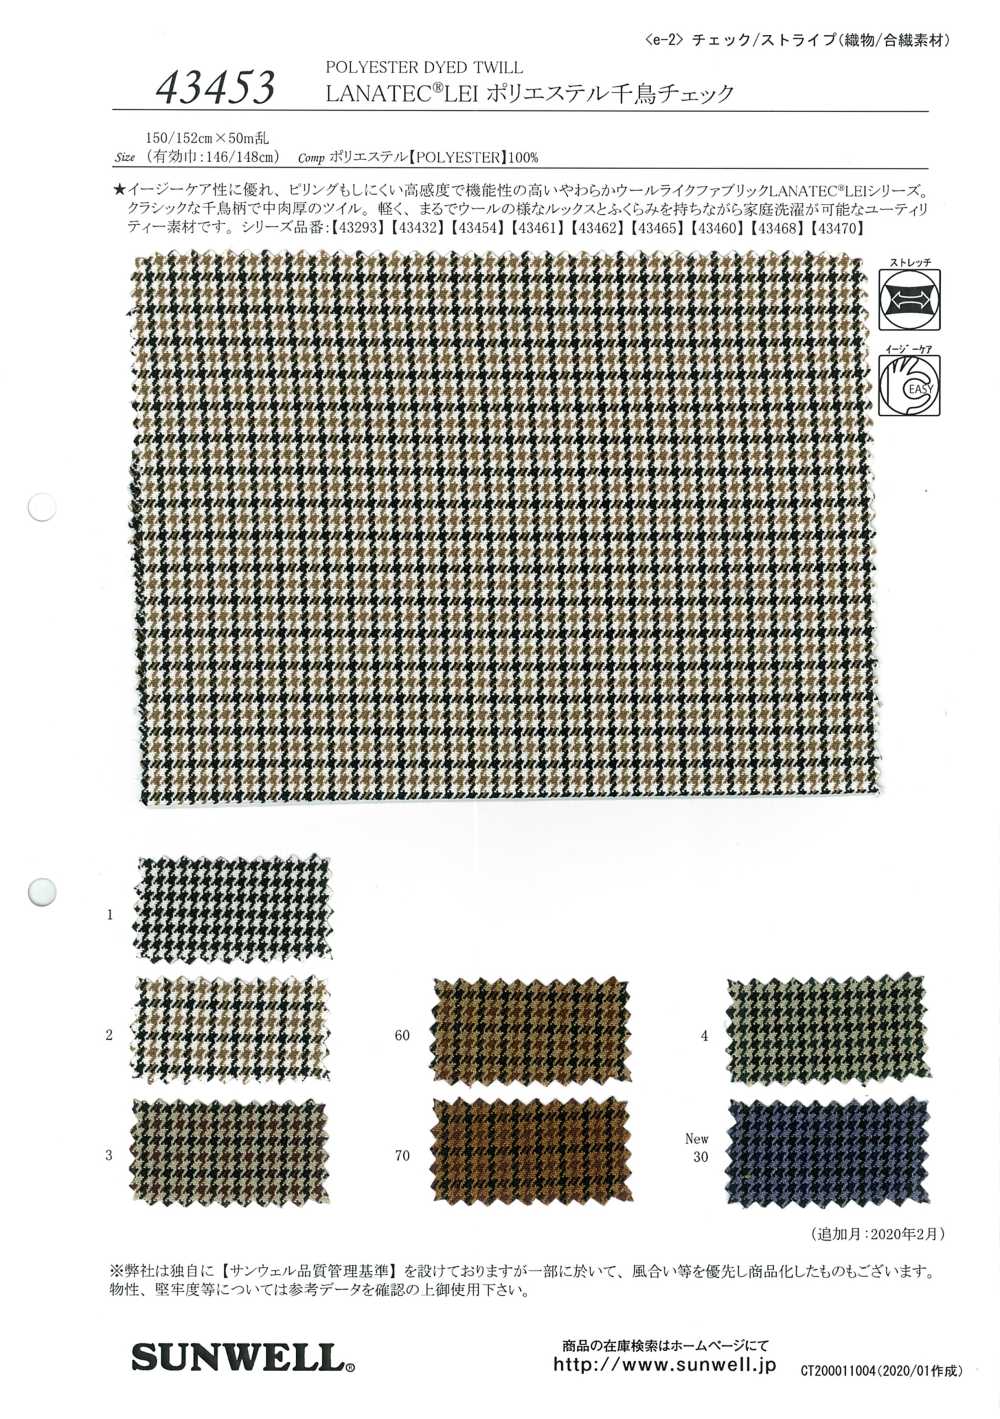 43453 LANATEC(R) LEI Poliéster Cuadro Pata De Gallo[Fabrica Textil] SUNWELL